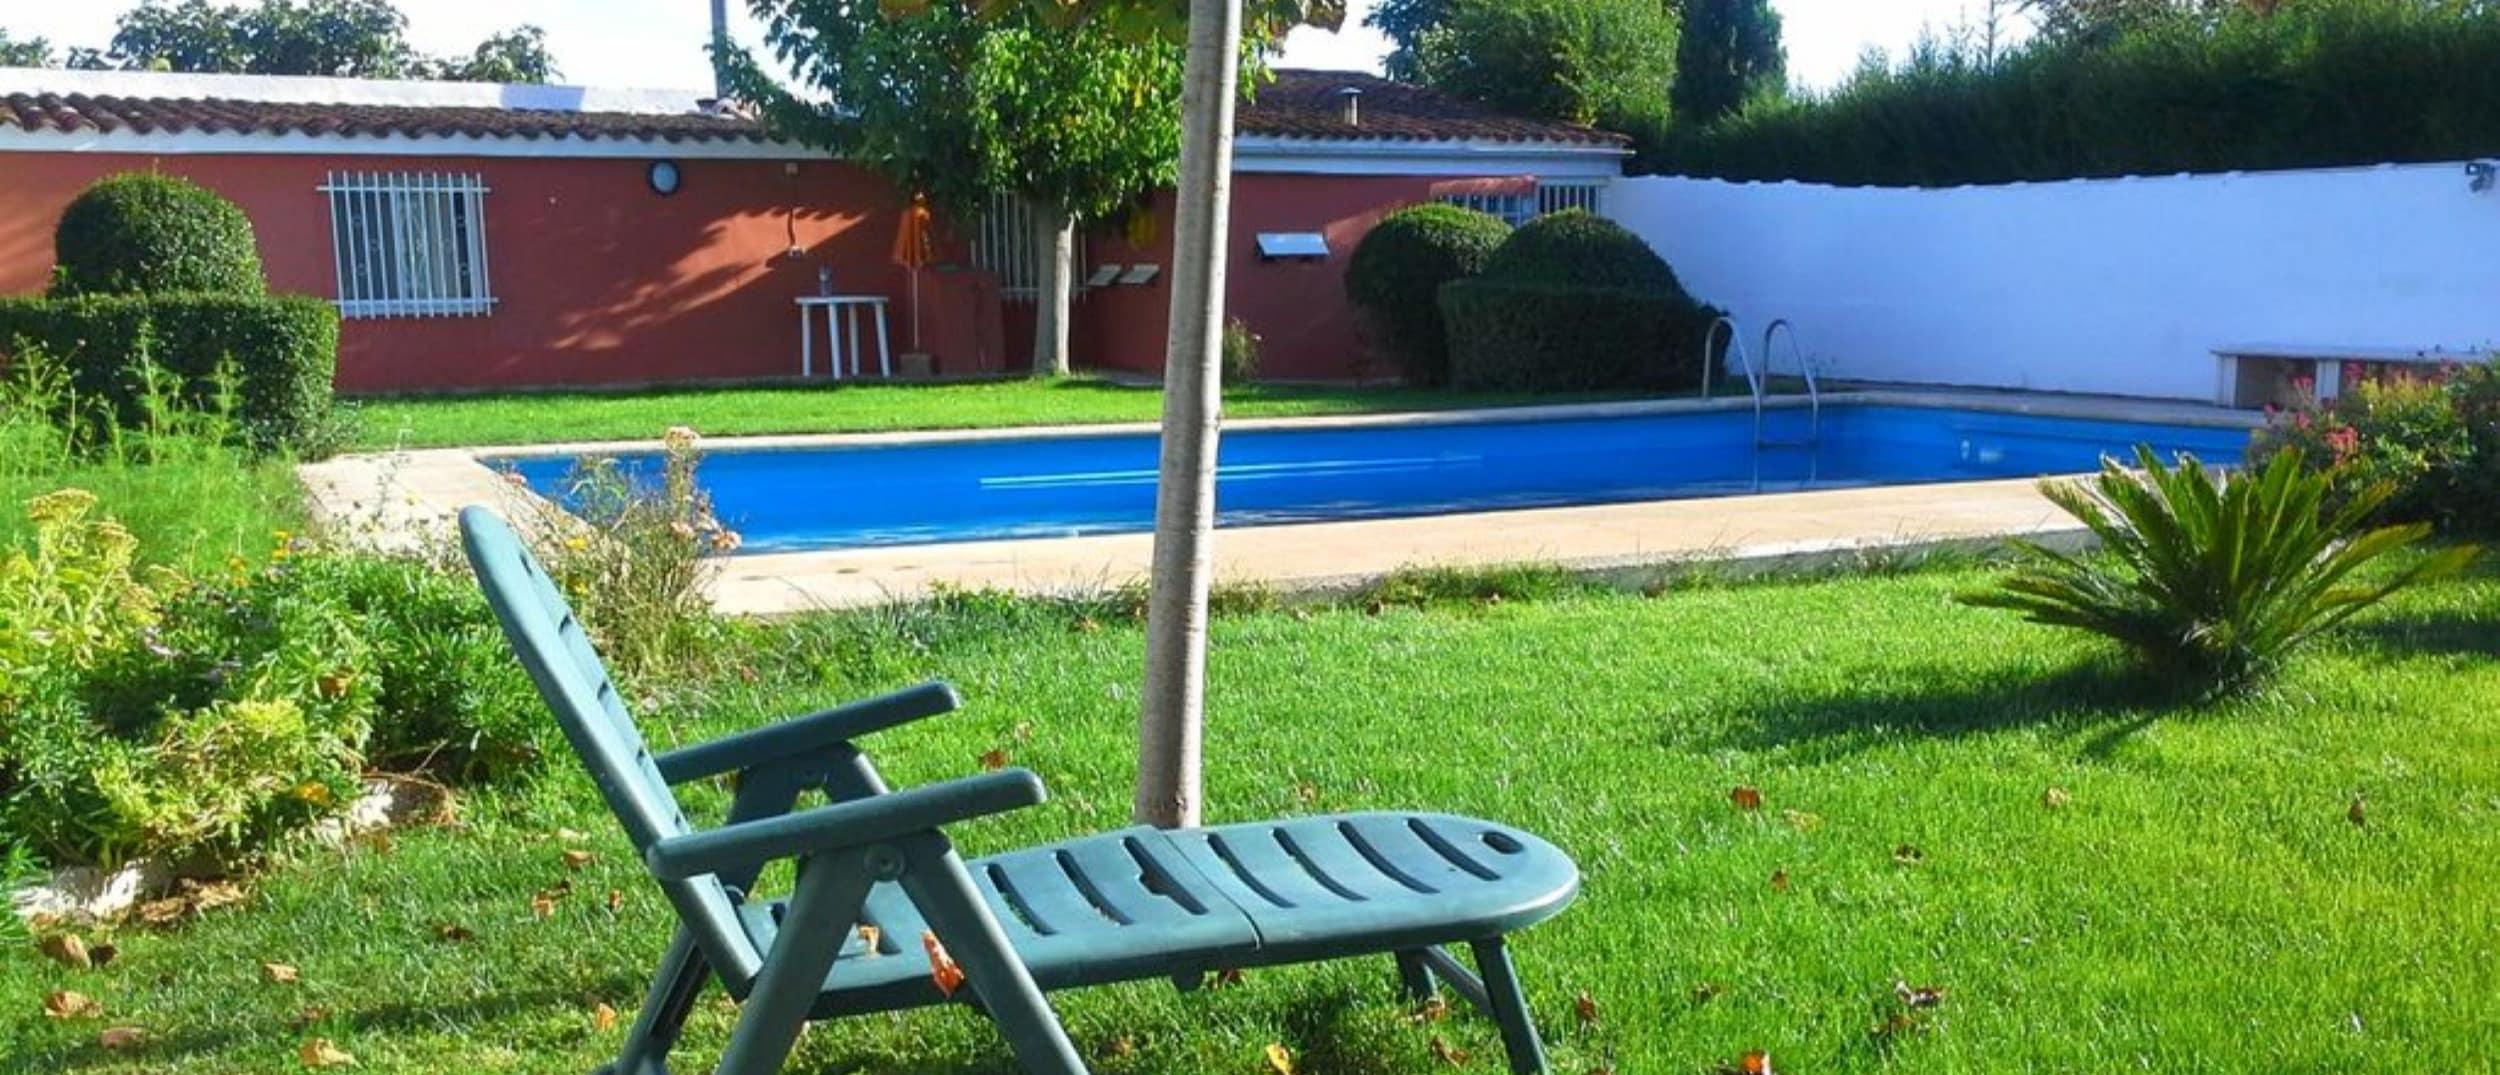 Tu piscina te espera en una acogedora casa rural en Aragón